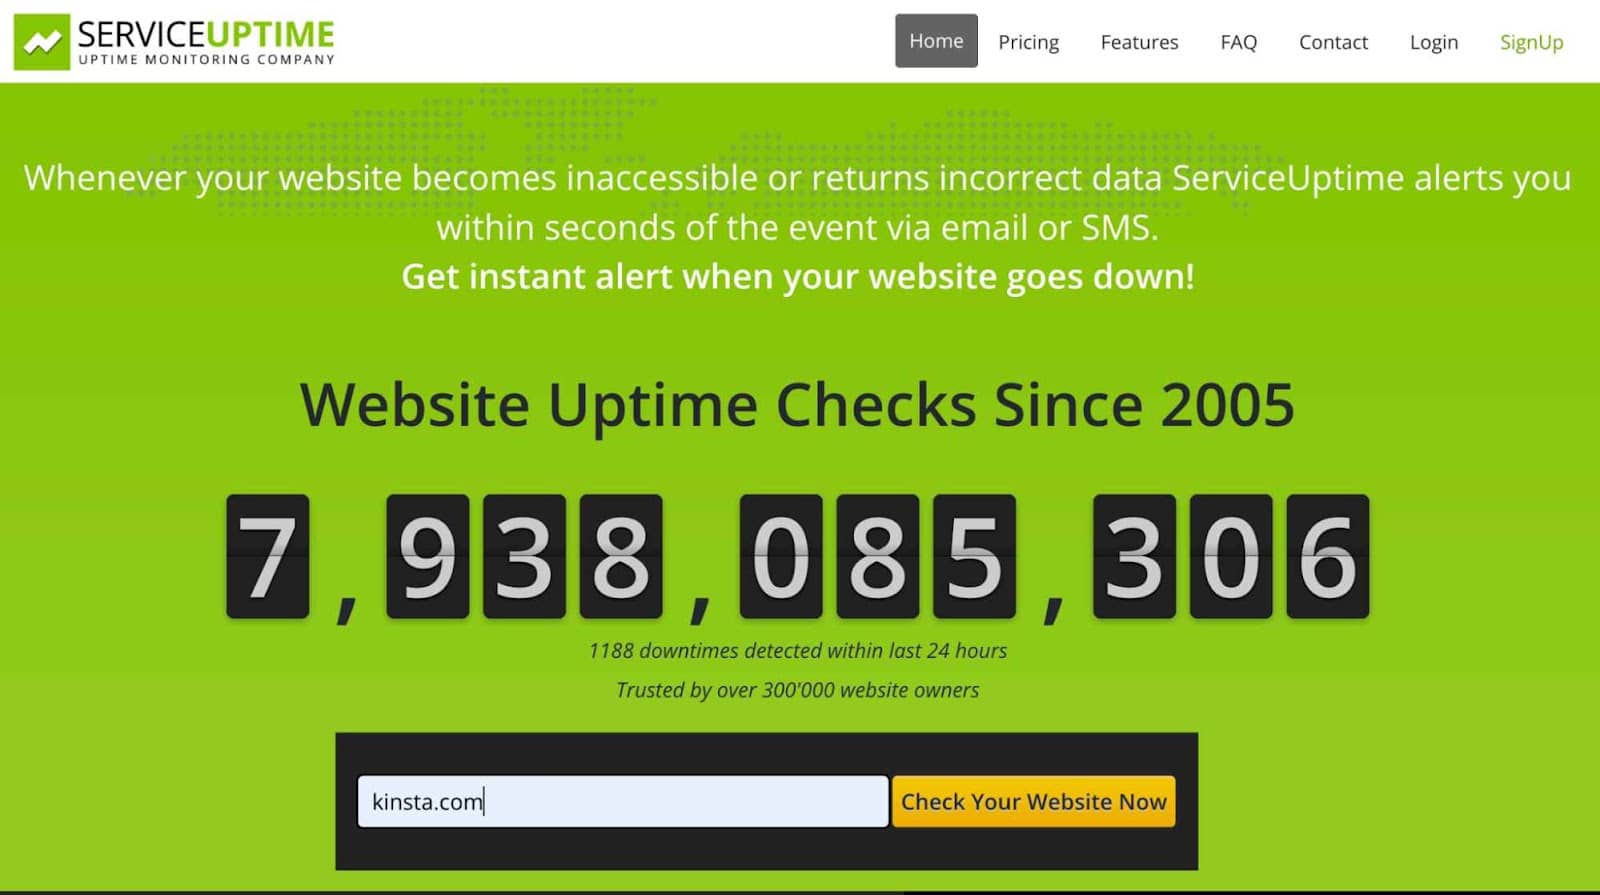 Sitio Web Service Uptime